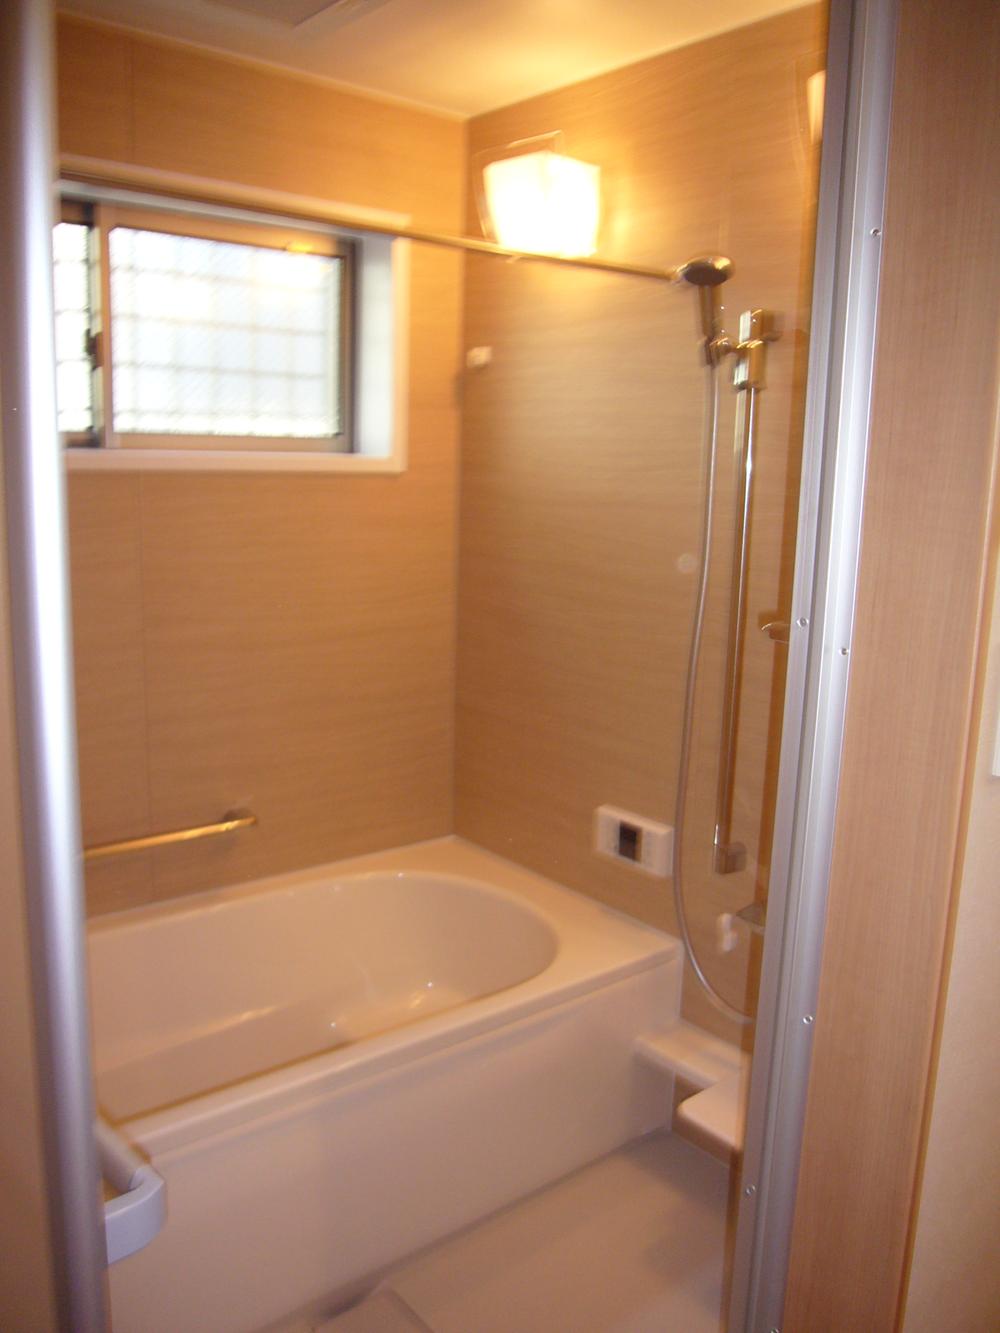 Bathroom. ◇ bathroom with a bathroom ventilation dryer ◇ November 2012 shooting